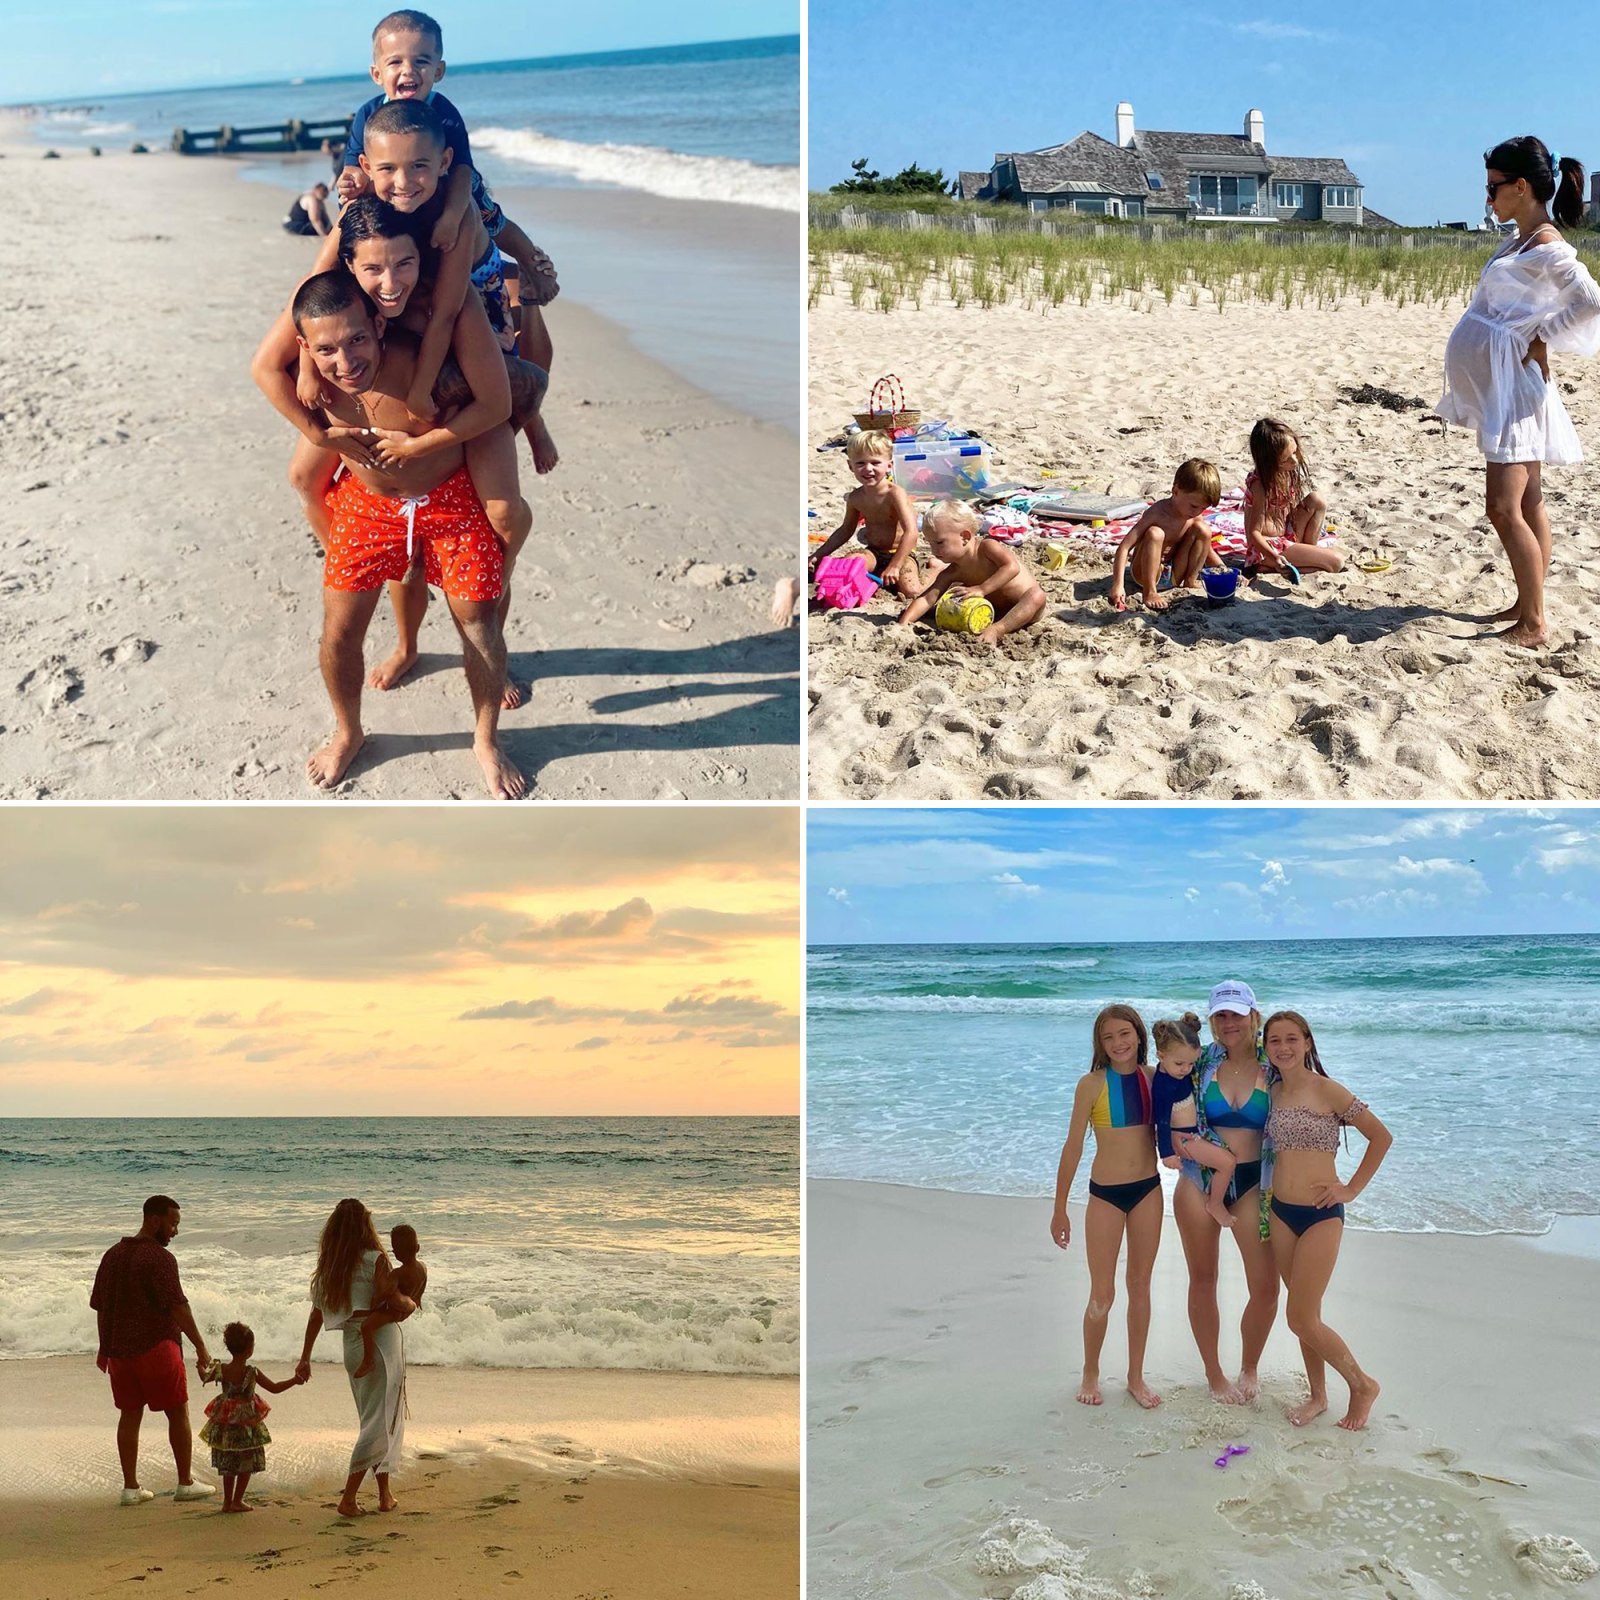 Naked Couples At Beach Tanning - Celeb Families' Beach Trips Amid Coronavirus Pandemic: Pics